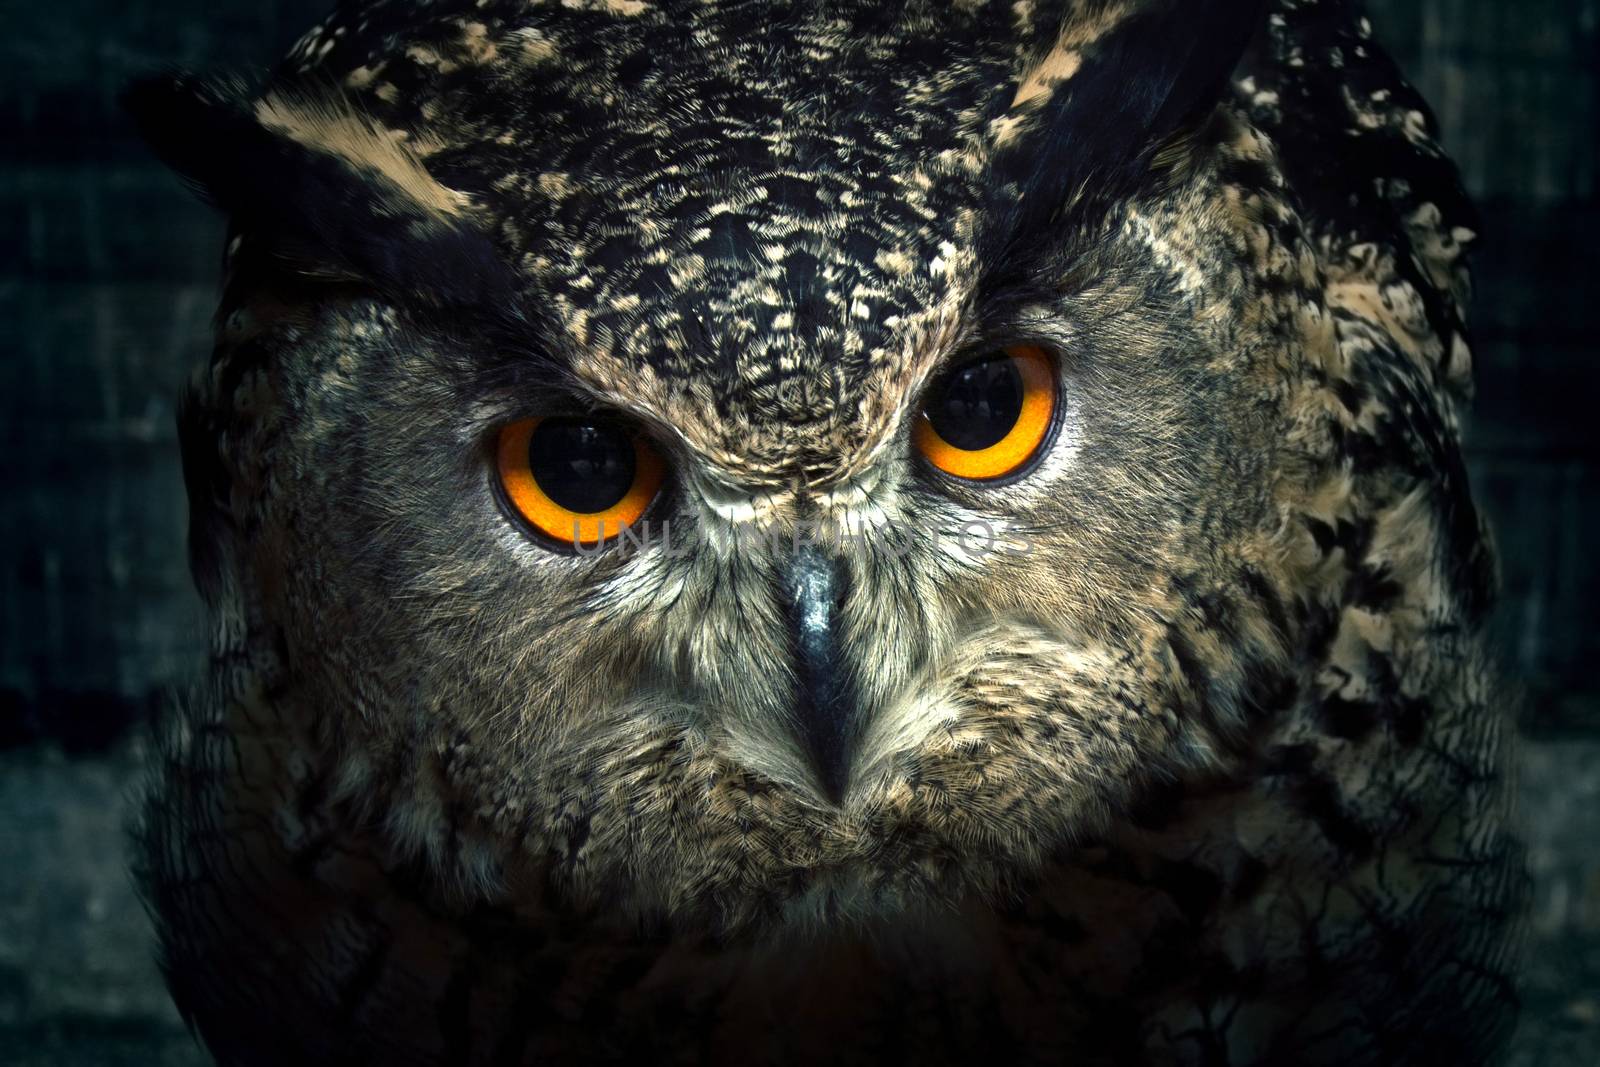 Owl eyes close up. Bird of prey portrait. Wild animal.